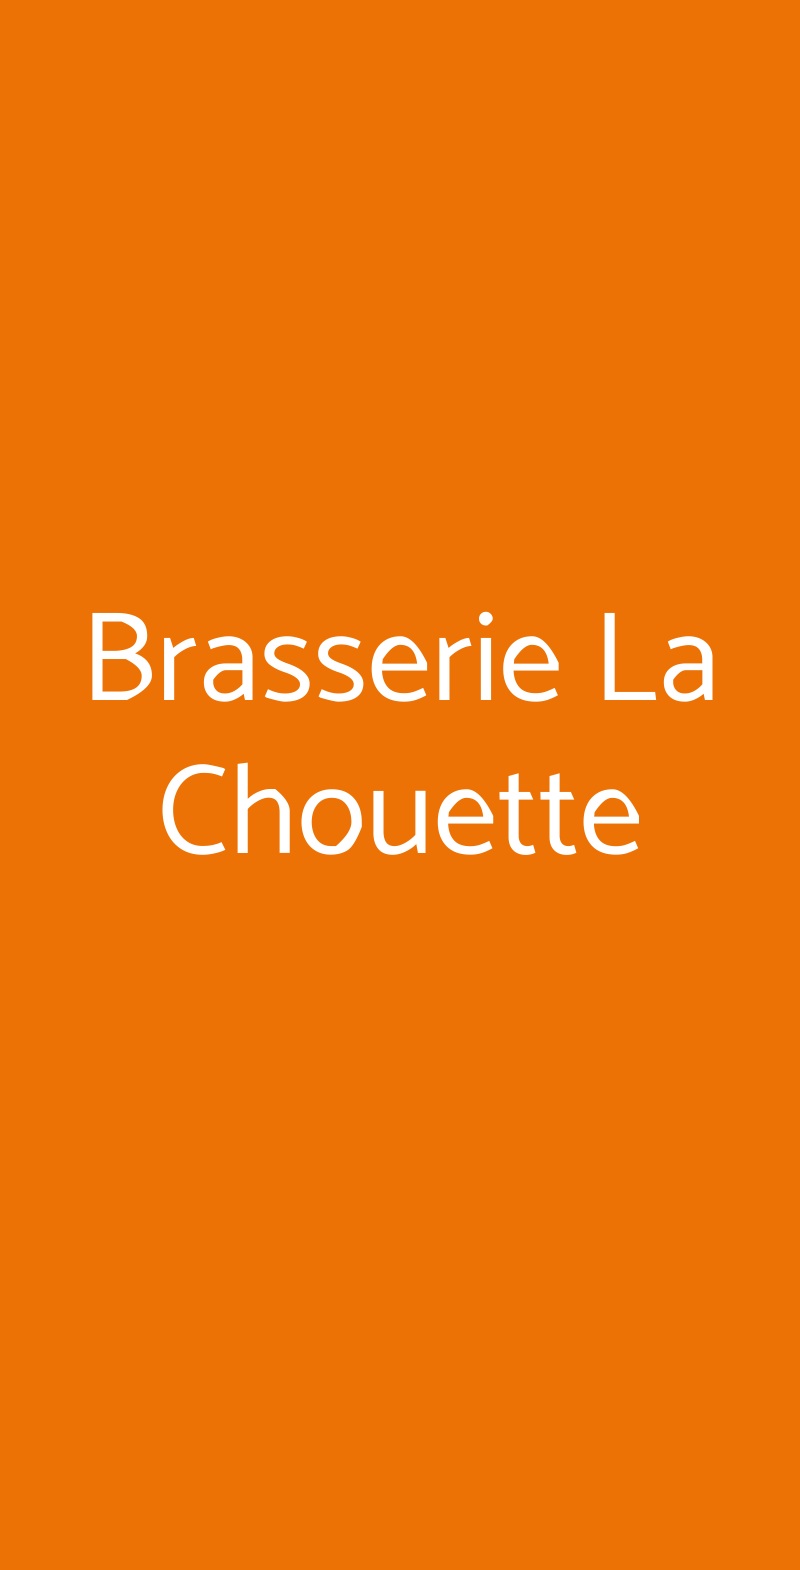 Brasserie La Chouette Firenze menù 1 pagina